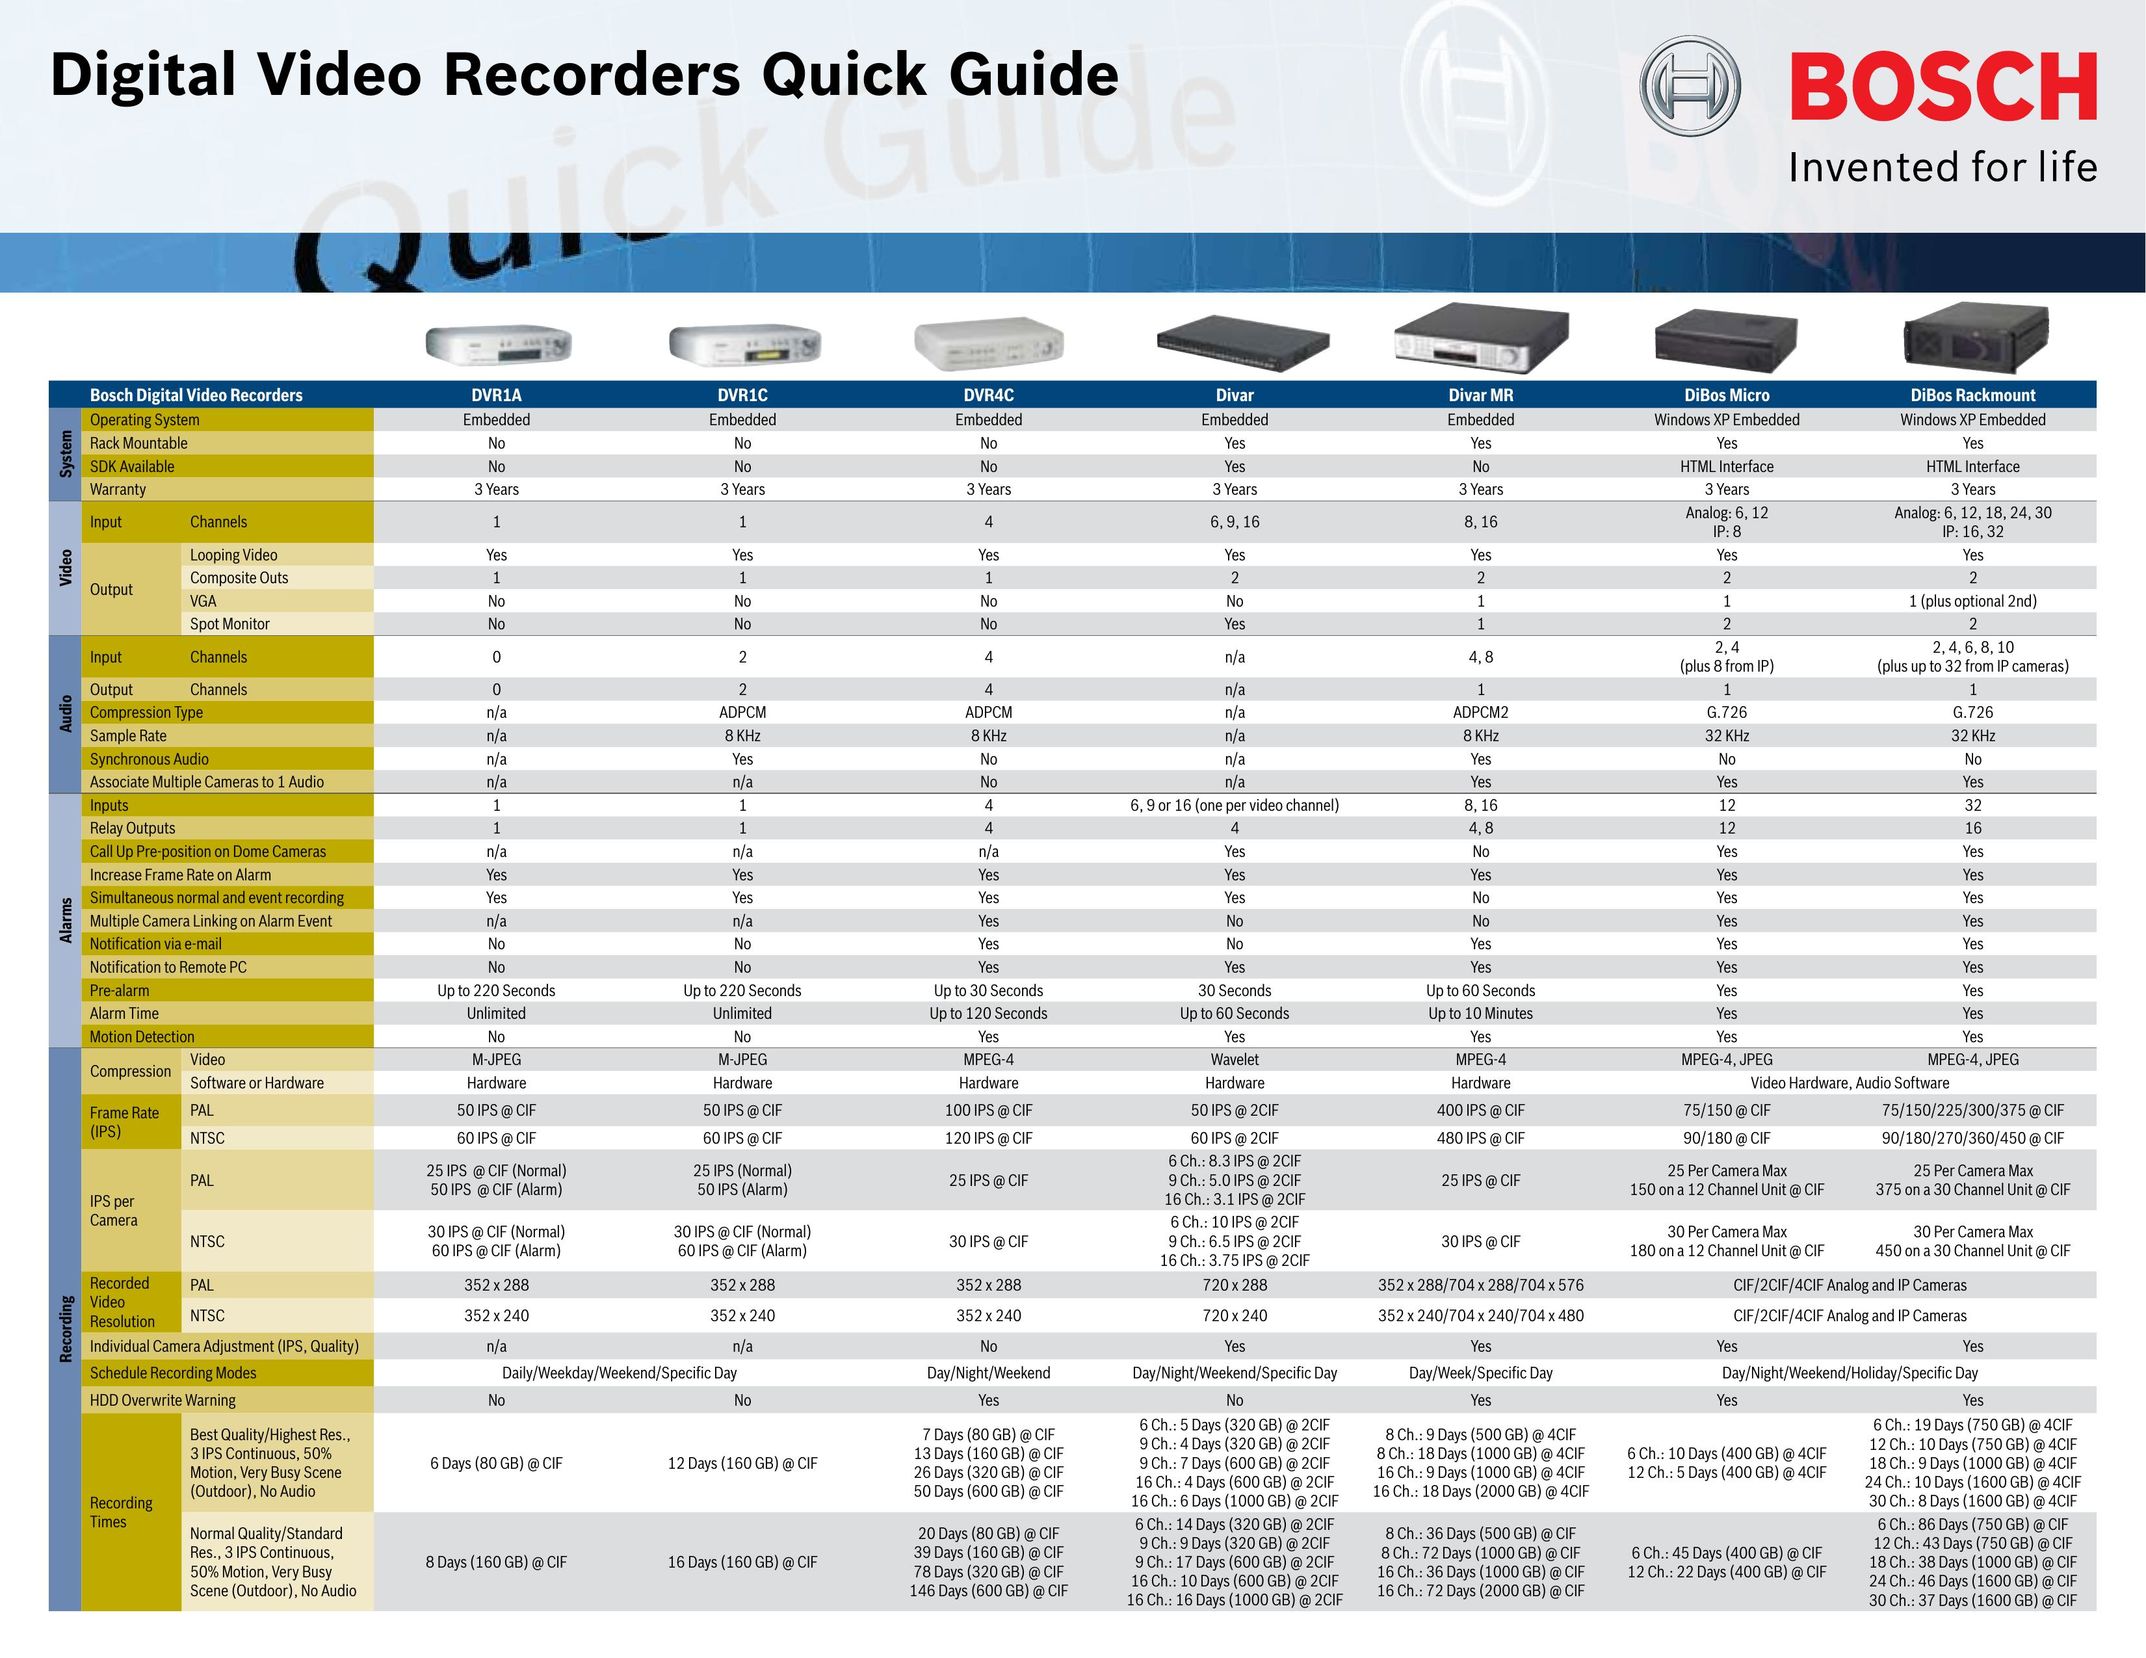 Bosch Appliances DIVAR MR DVR User Manual